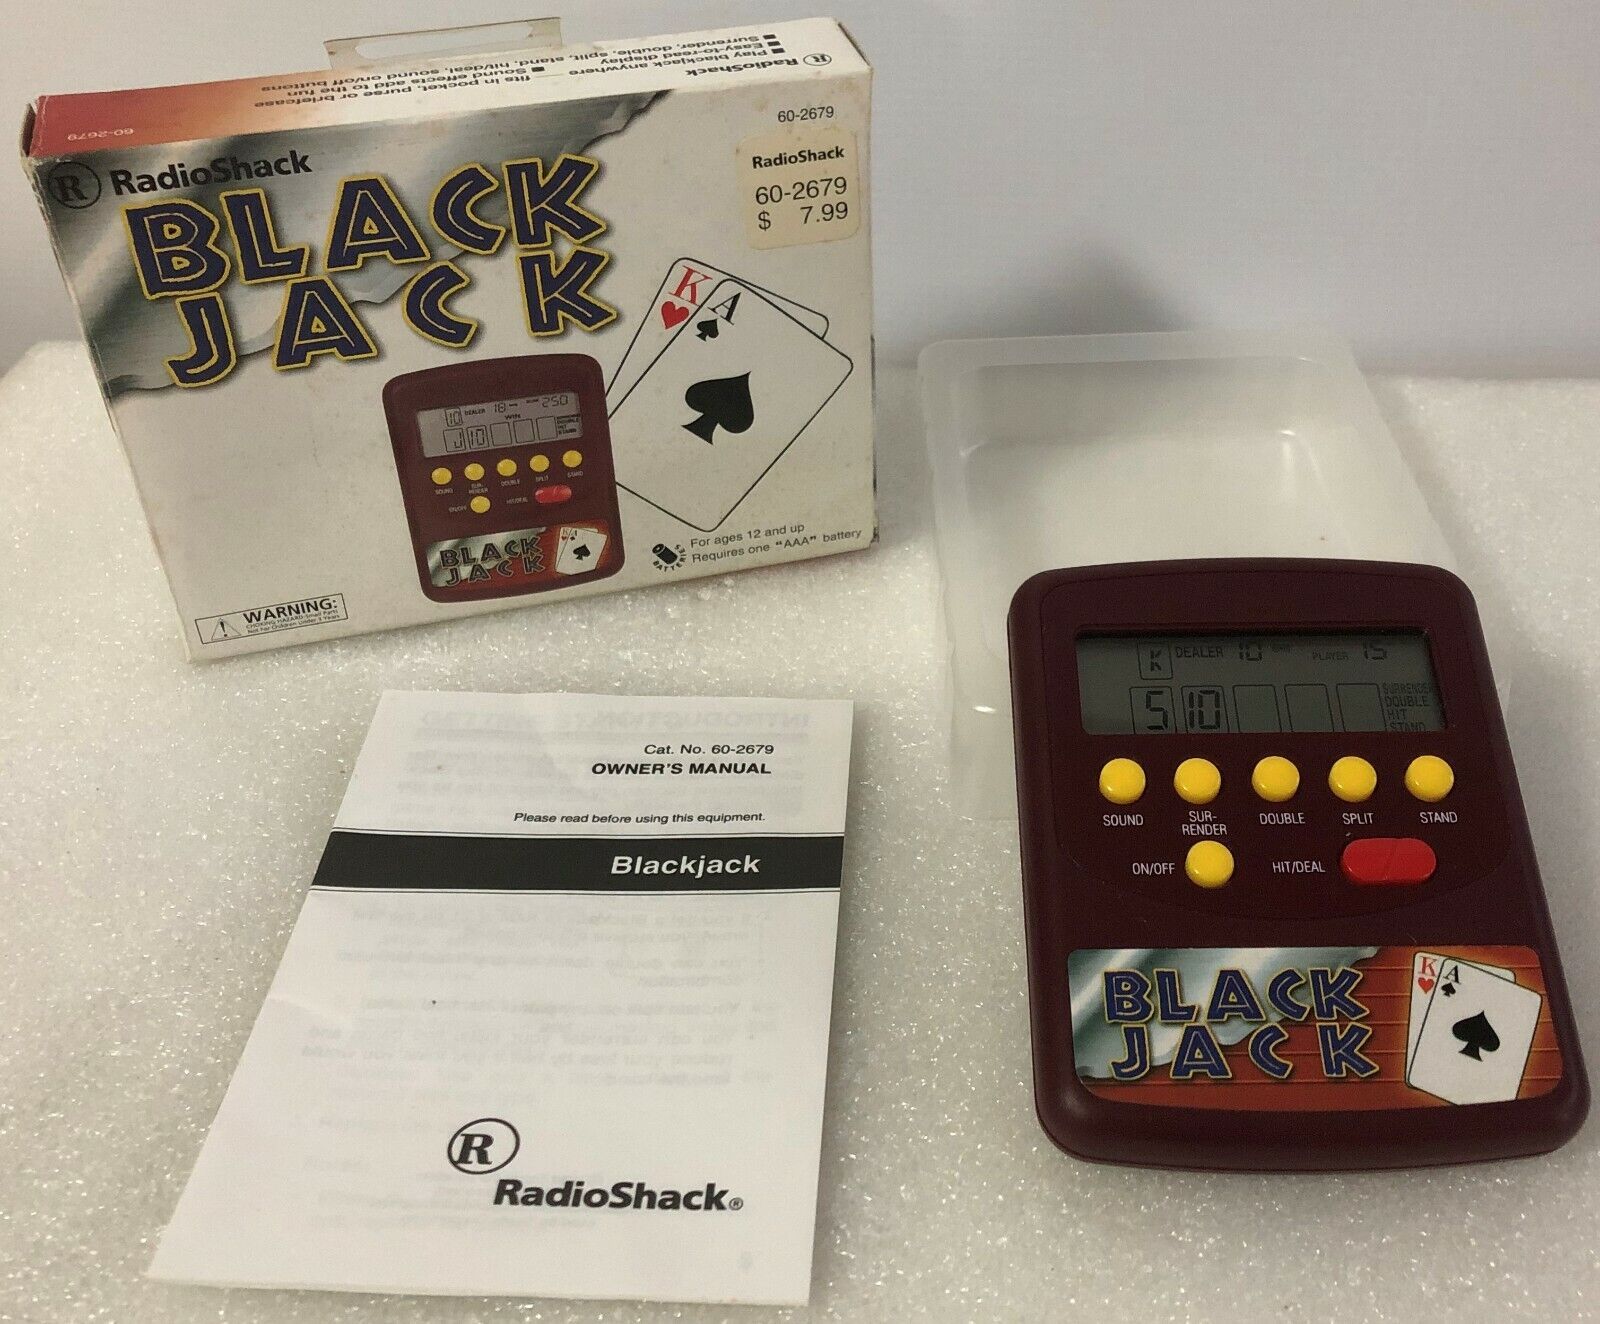 Vintage Radio Shack Hand Held Electronic Black Jack Card Game No. 60-2679 w/ Box - $10.88